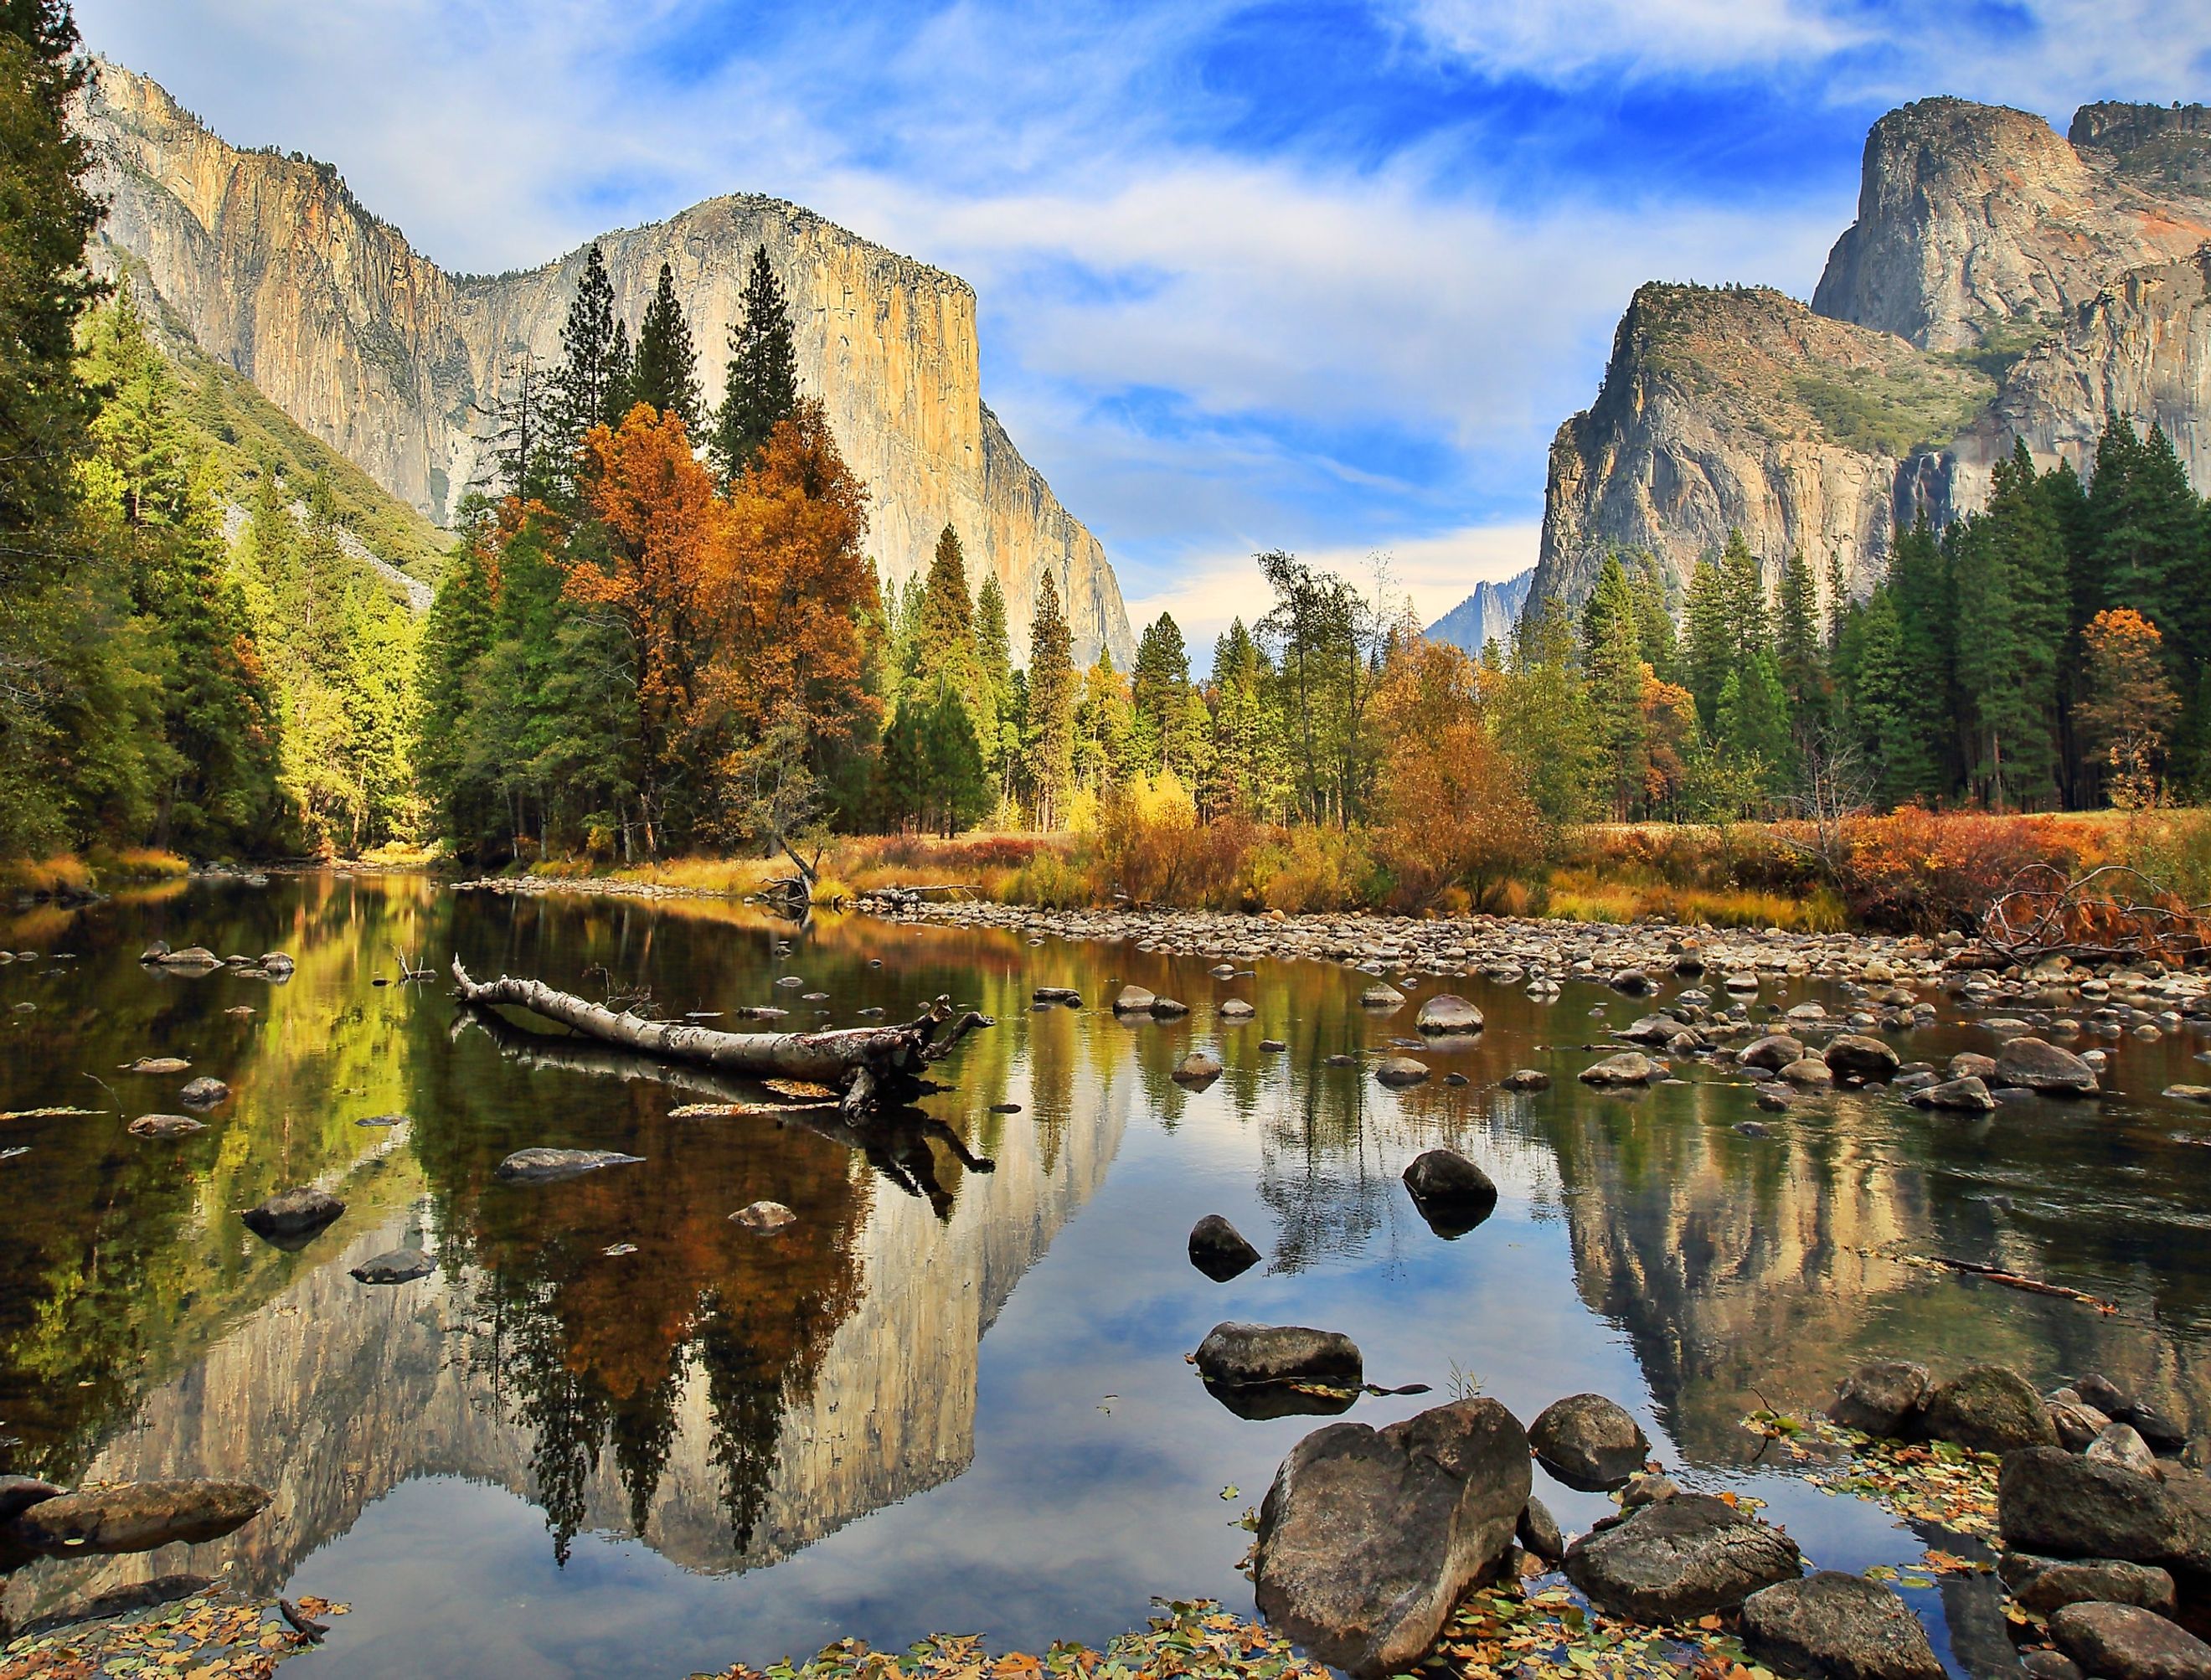 El Capitan and Merced River in the Autumn, Yosemite, California. Image credit Nadia Yong via shutterstock